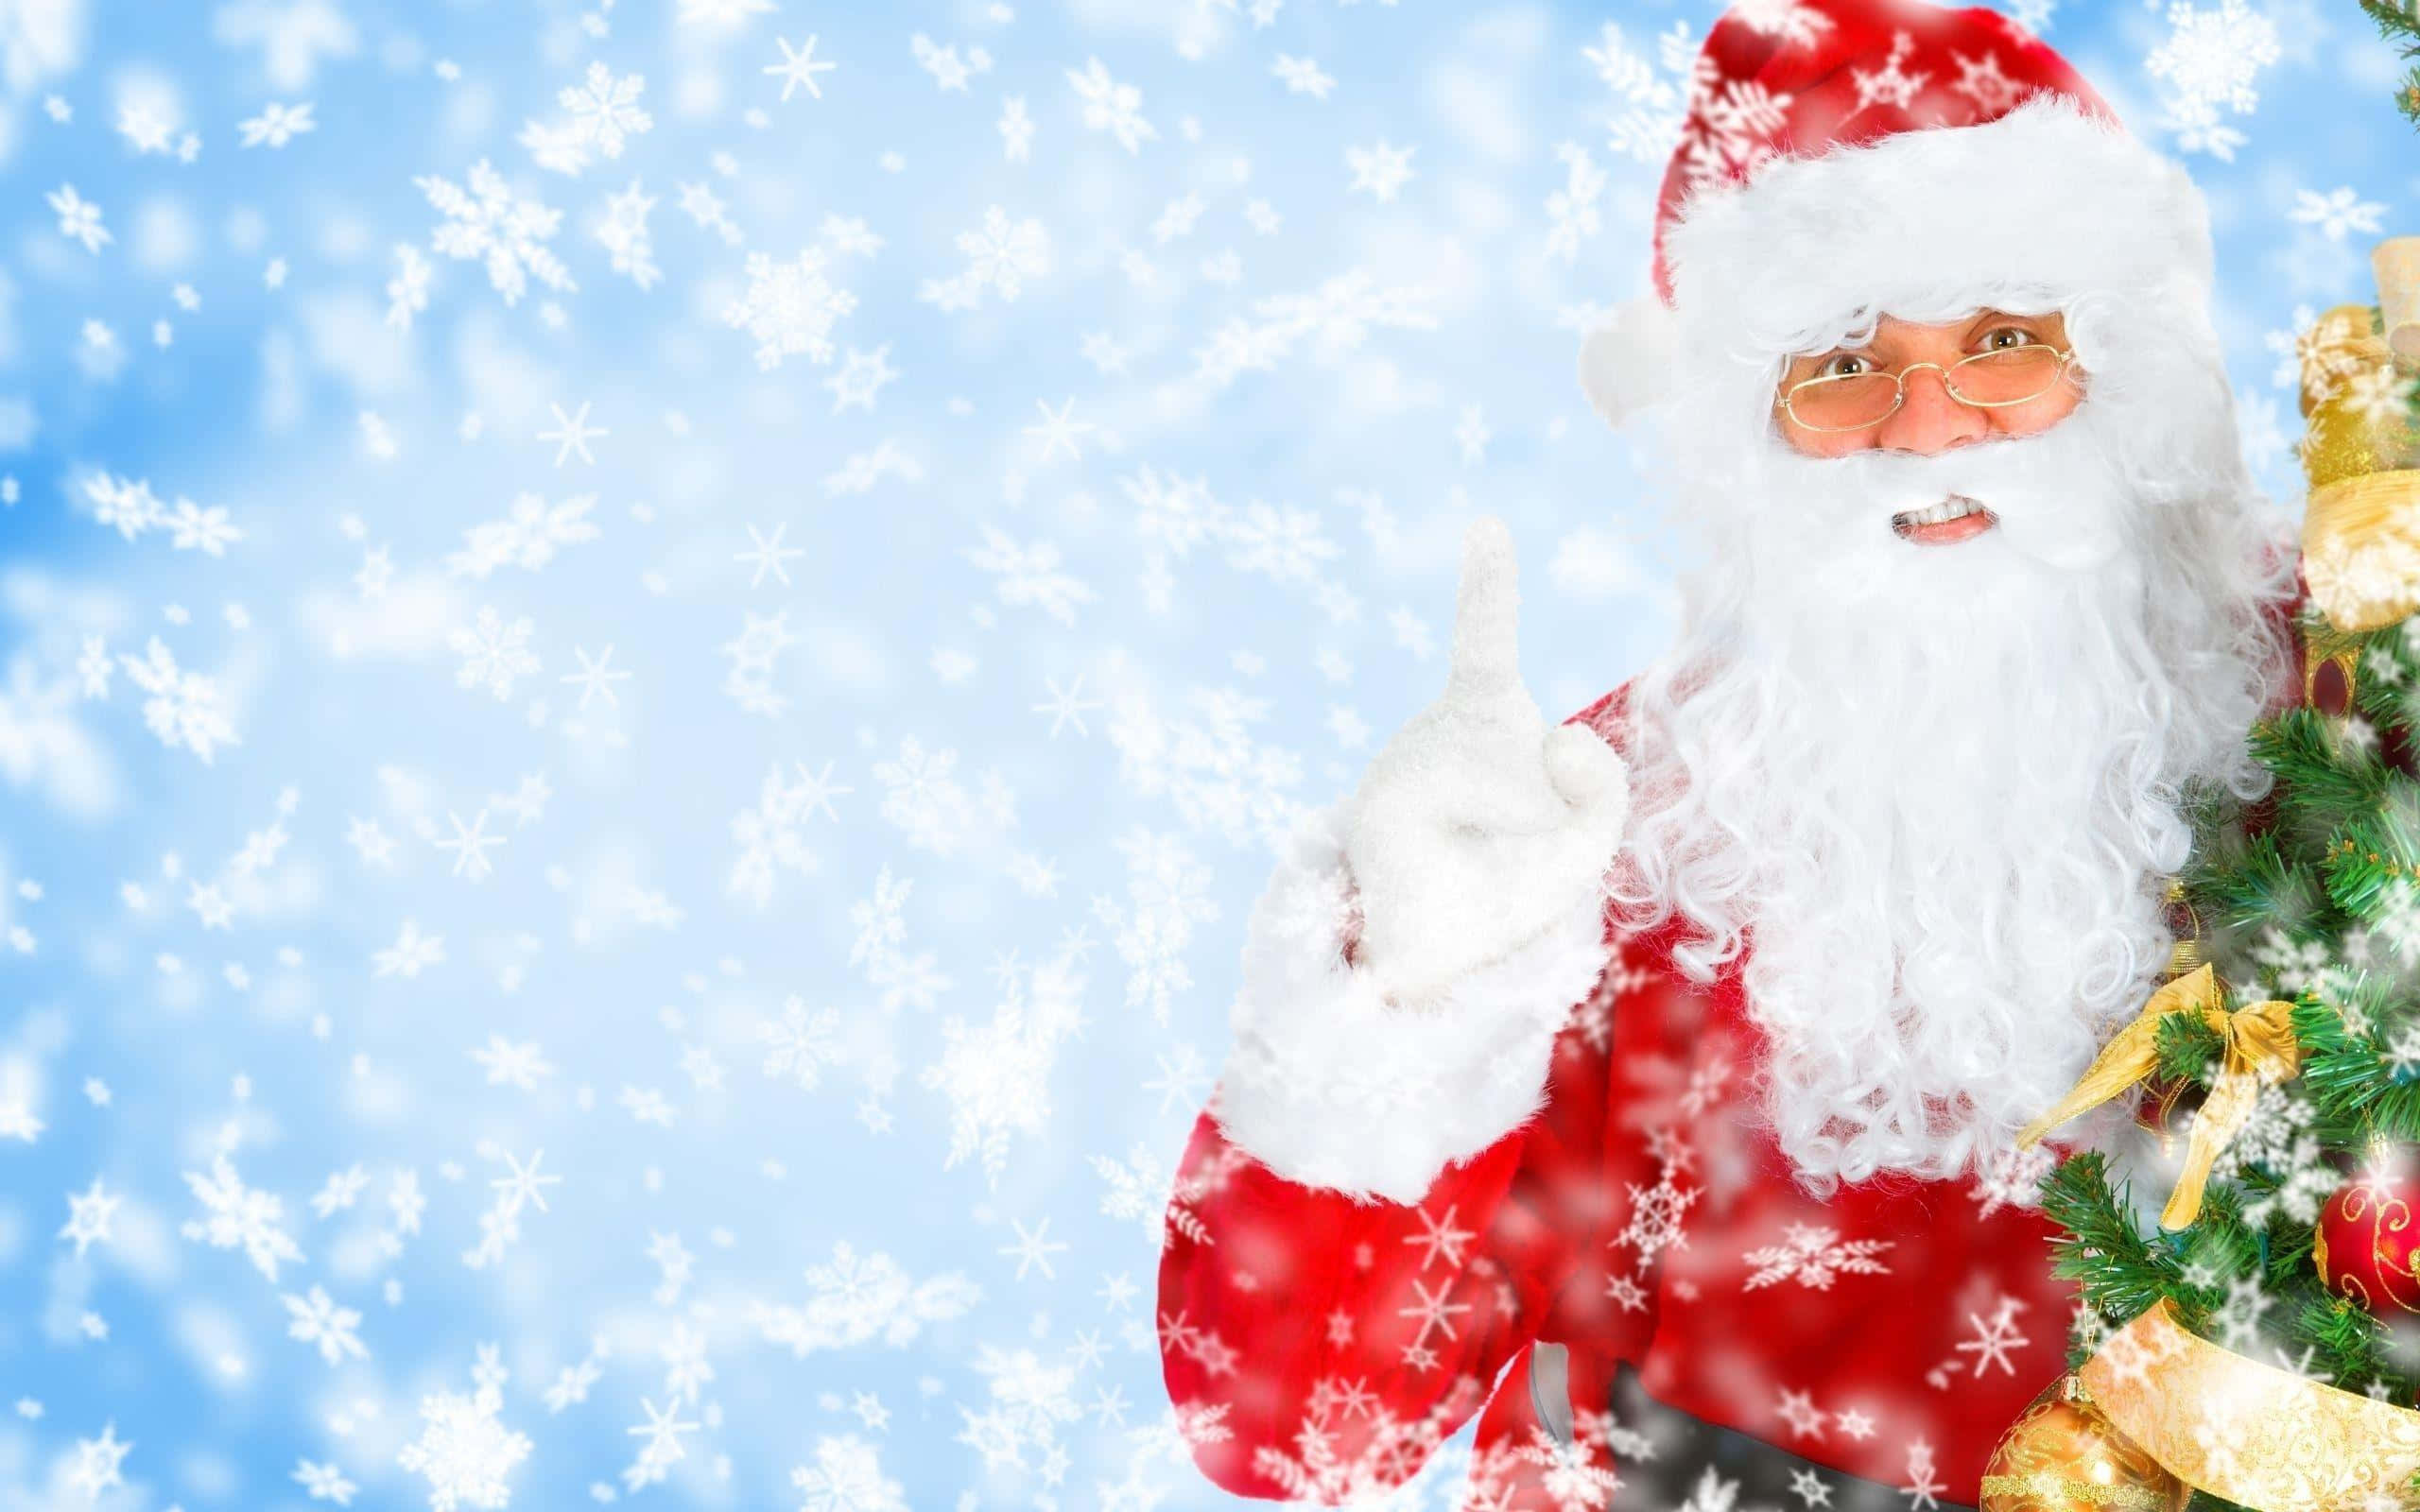 Santa Claus Holding a Gift Sack in Snowy Winter Wonderland